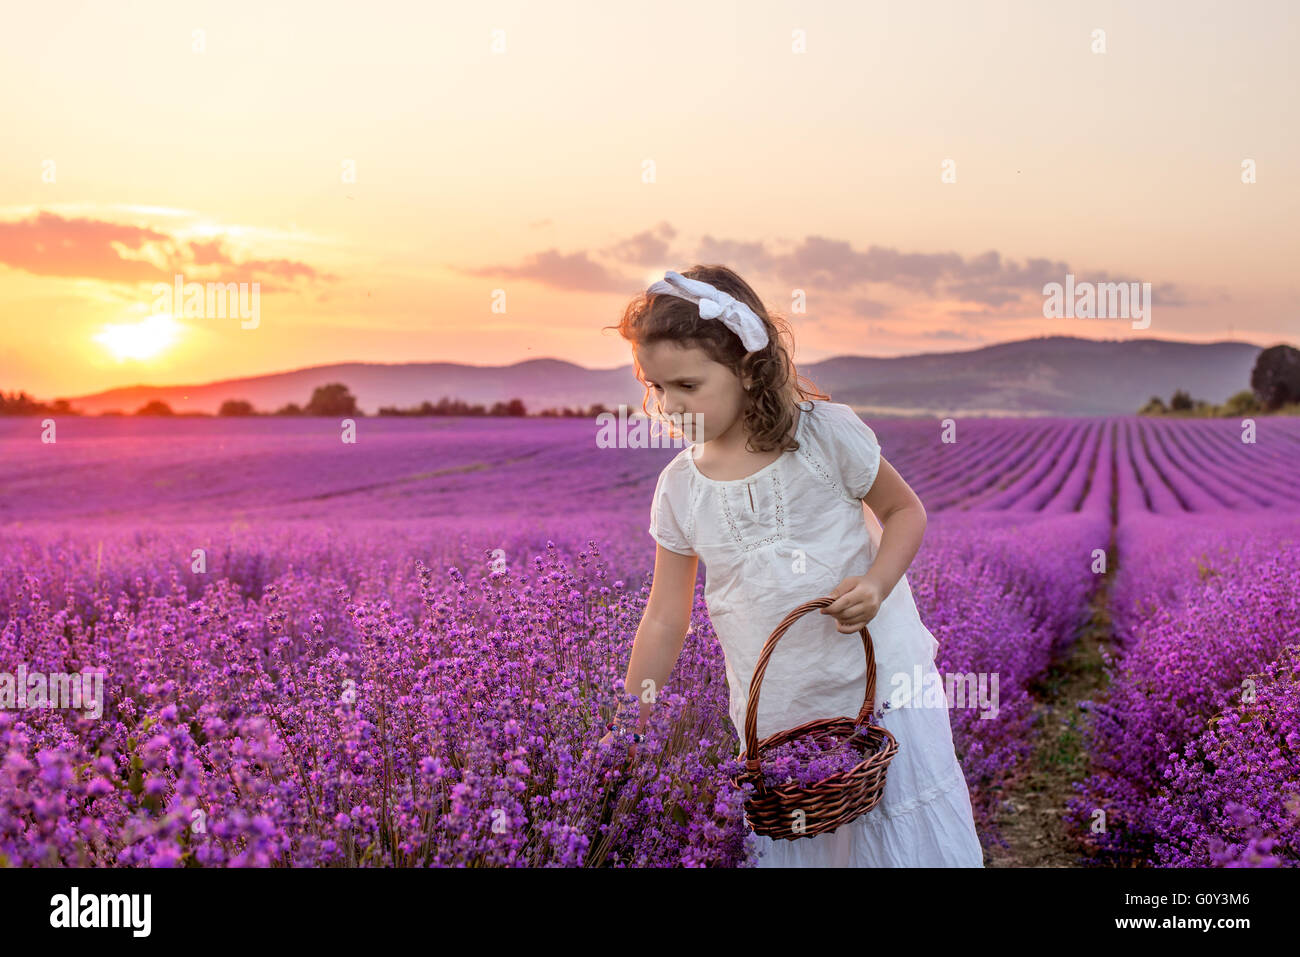 Girl picking lavender flowers in a field at sunset, Kazanlak, Bulgaria Stock Photo